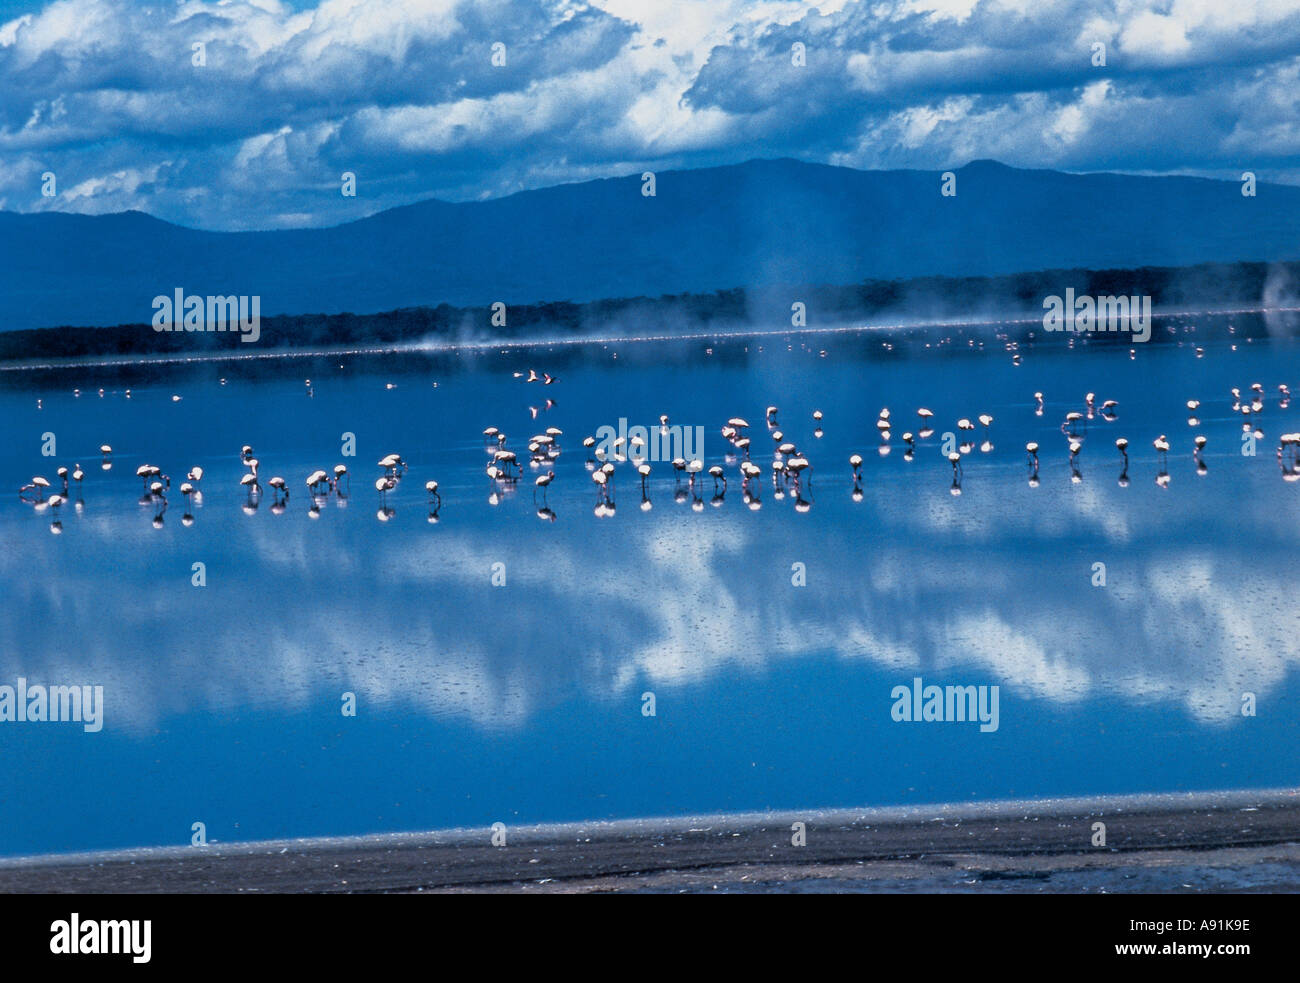 NMJ99694 Flamingos birds water sky blue Nukuru Lake Kenya Africa Stock Photo